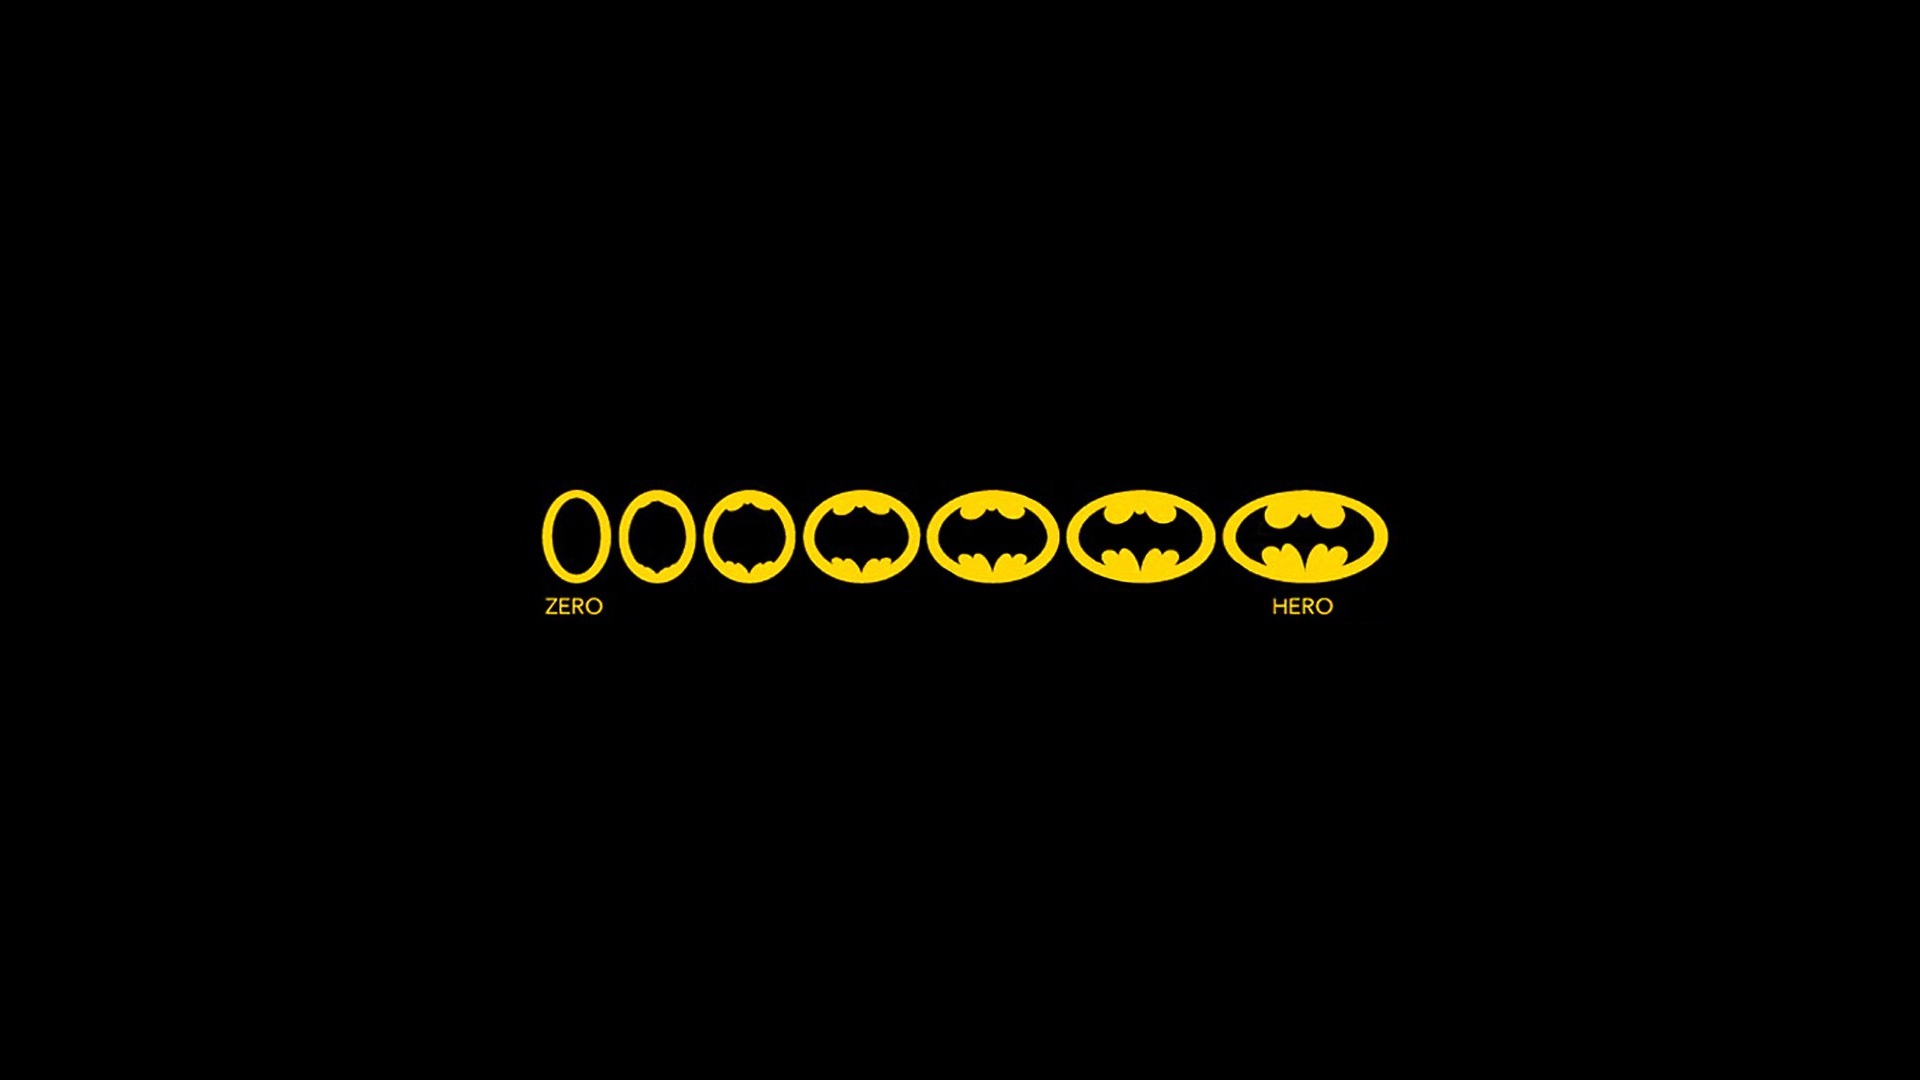 Скачать картинку Комиксы, Бэтмен, Логотип Бэтмена, Символ Бэтмена, Комиксы Dc, Лого в телефон бесплатно.